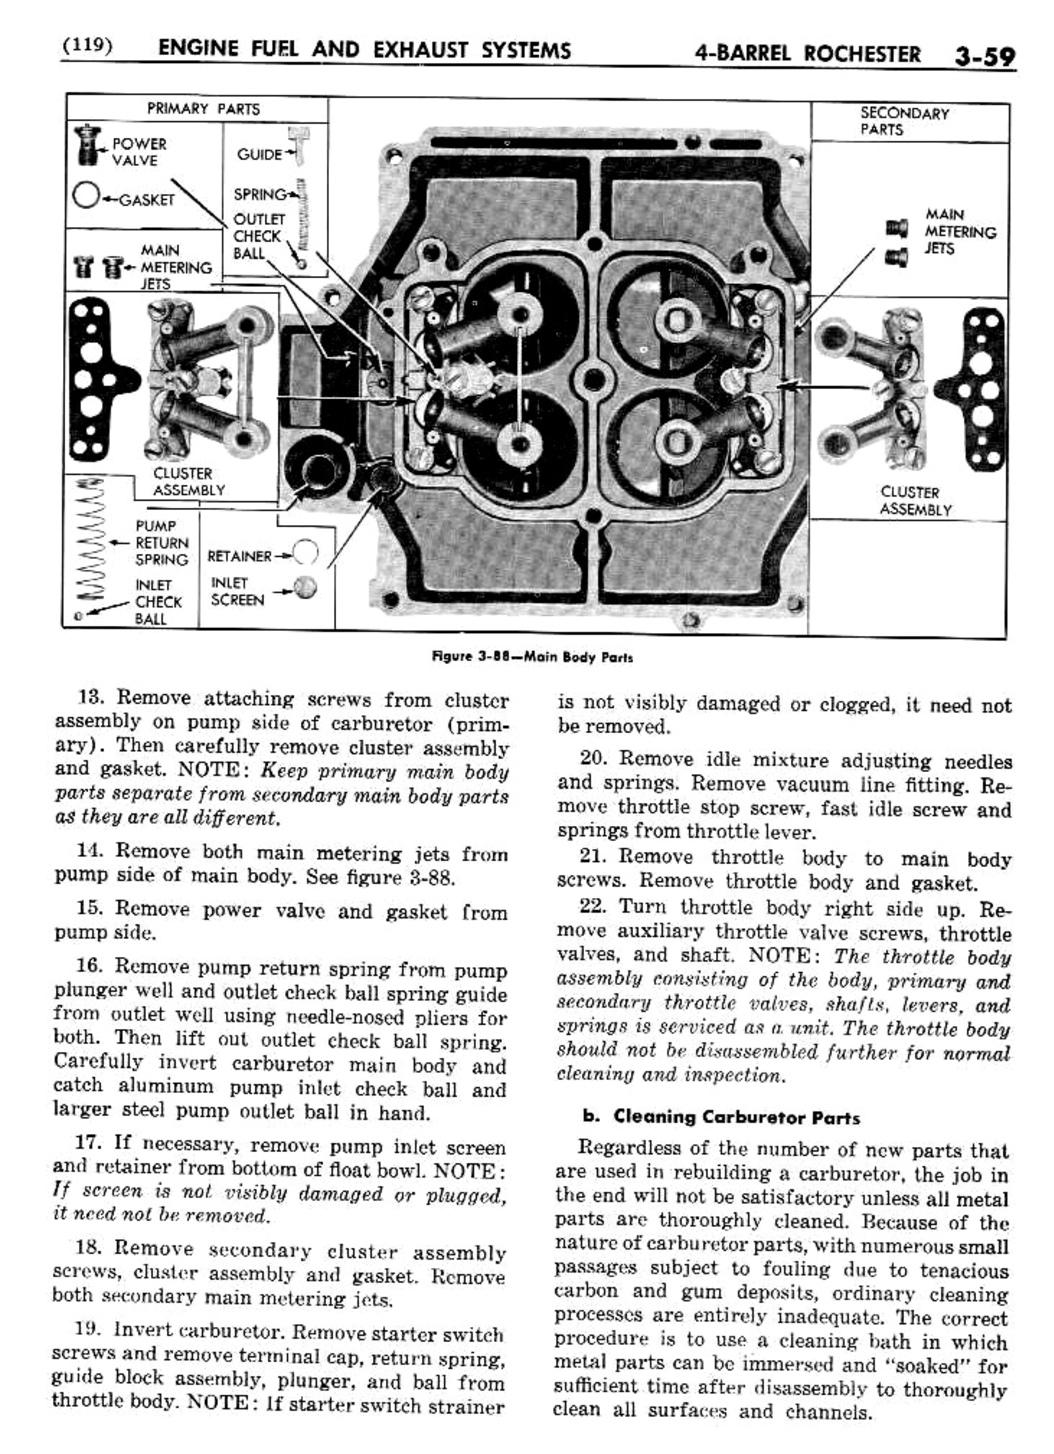 n_04 1956 Buick Shop Manual - Engine Fuel & Exhaust-059-059.jpg